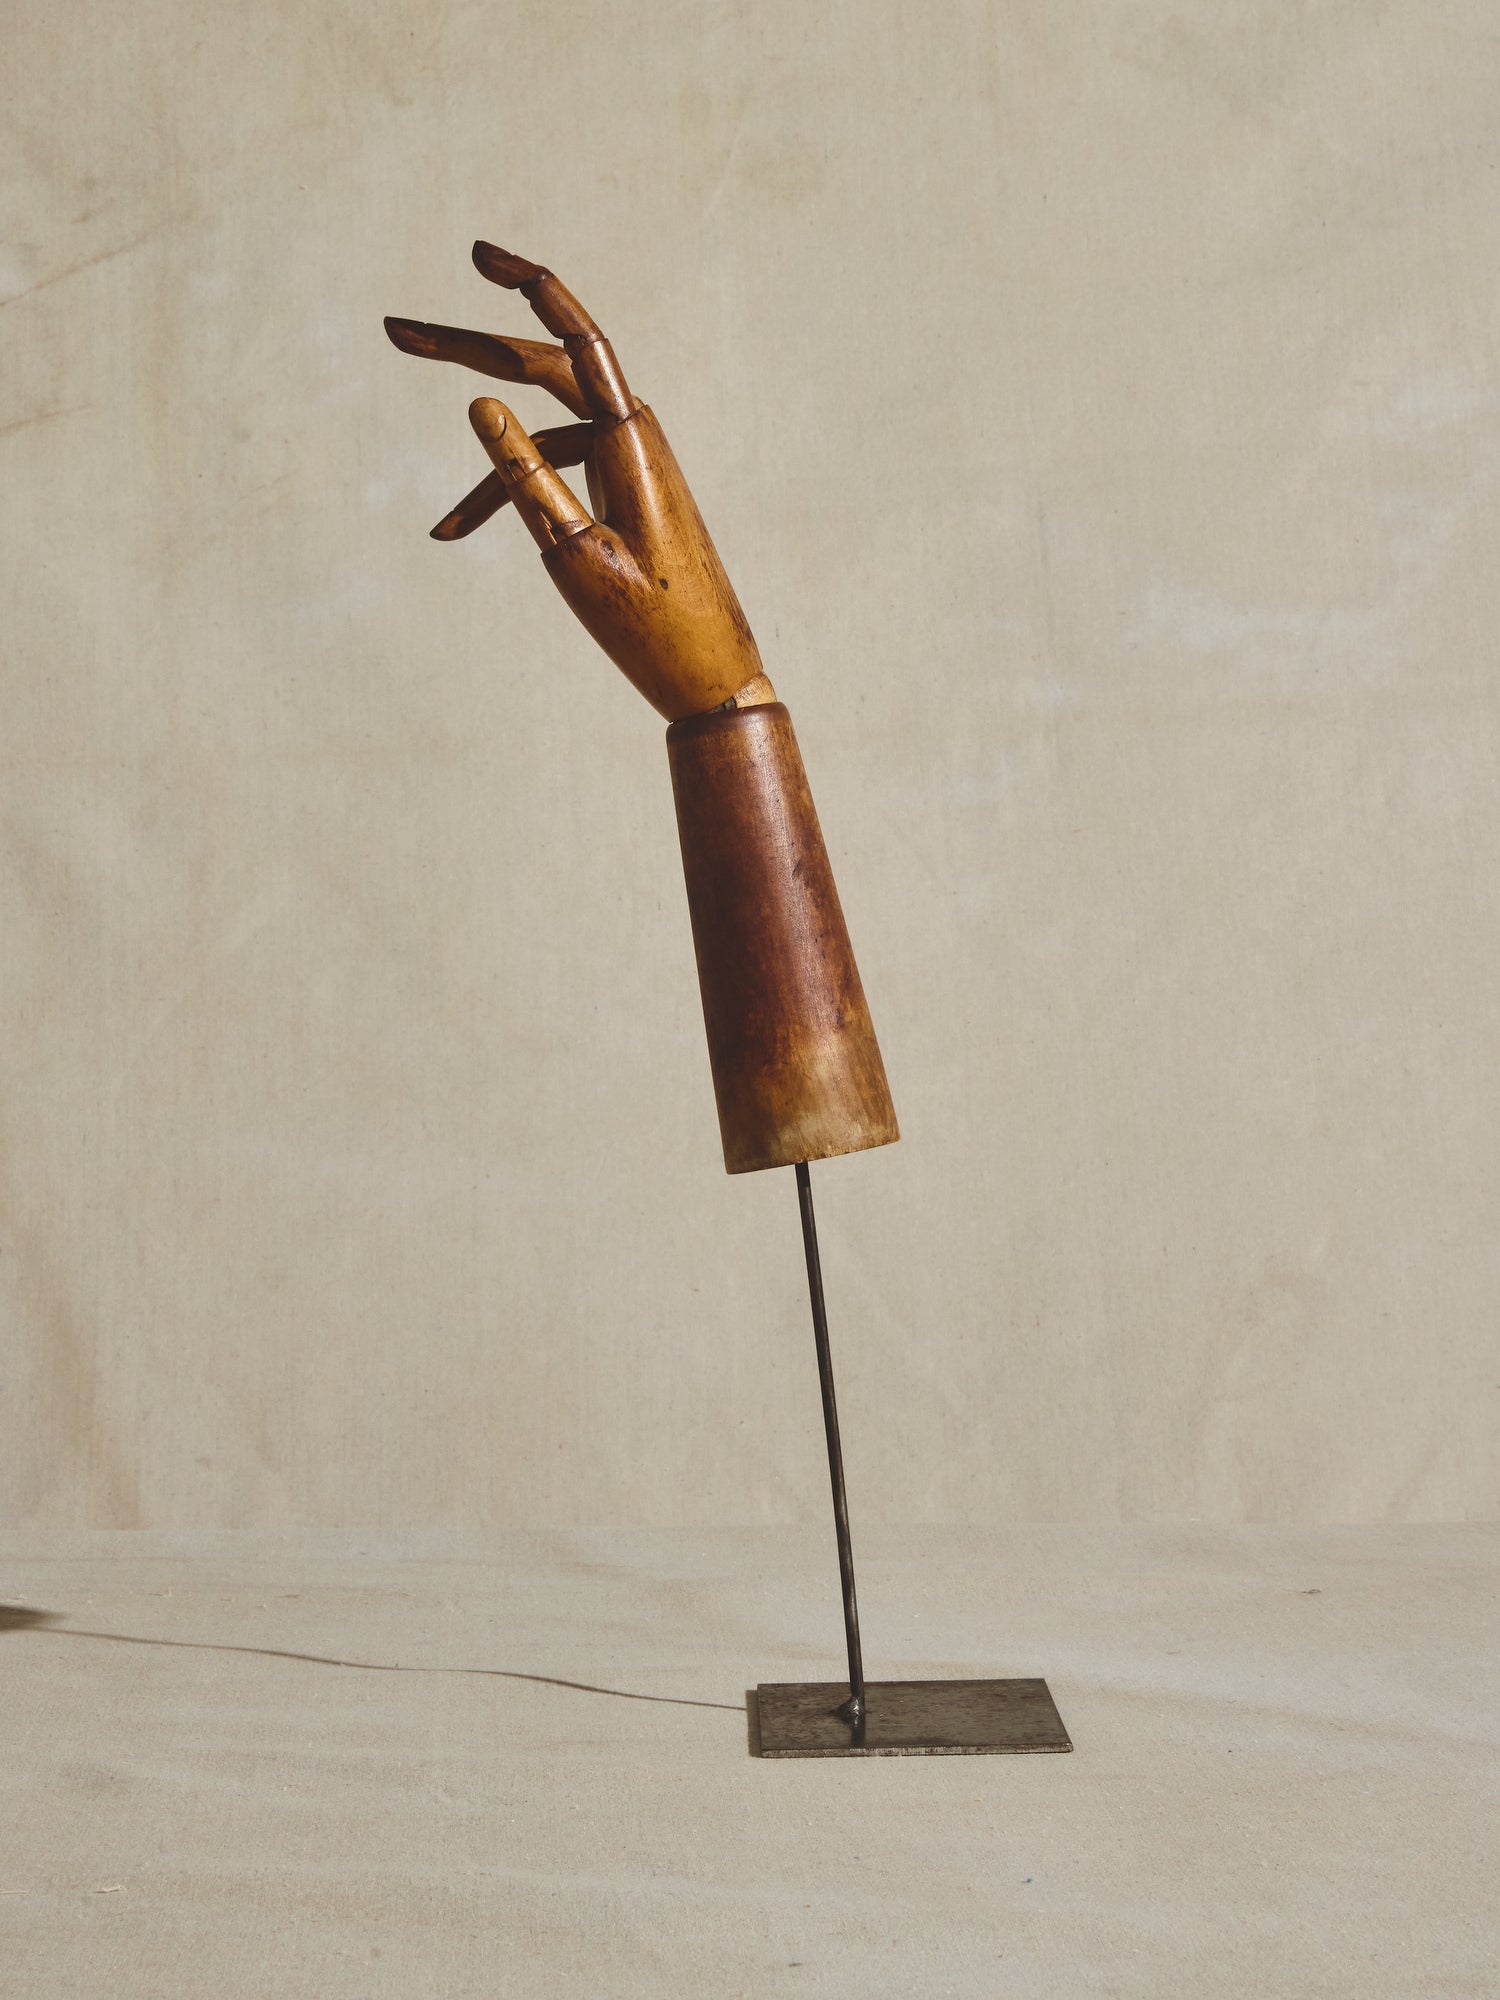 Articulated mannequin hand, on metal pedestal.